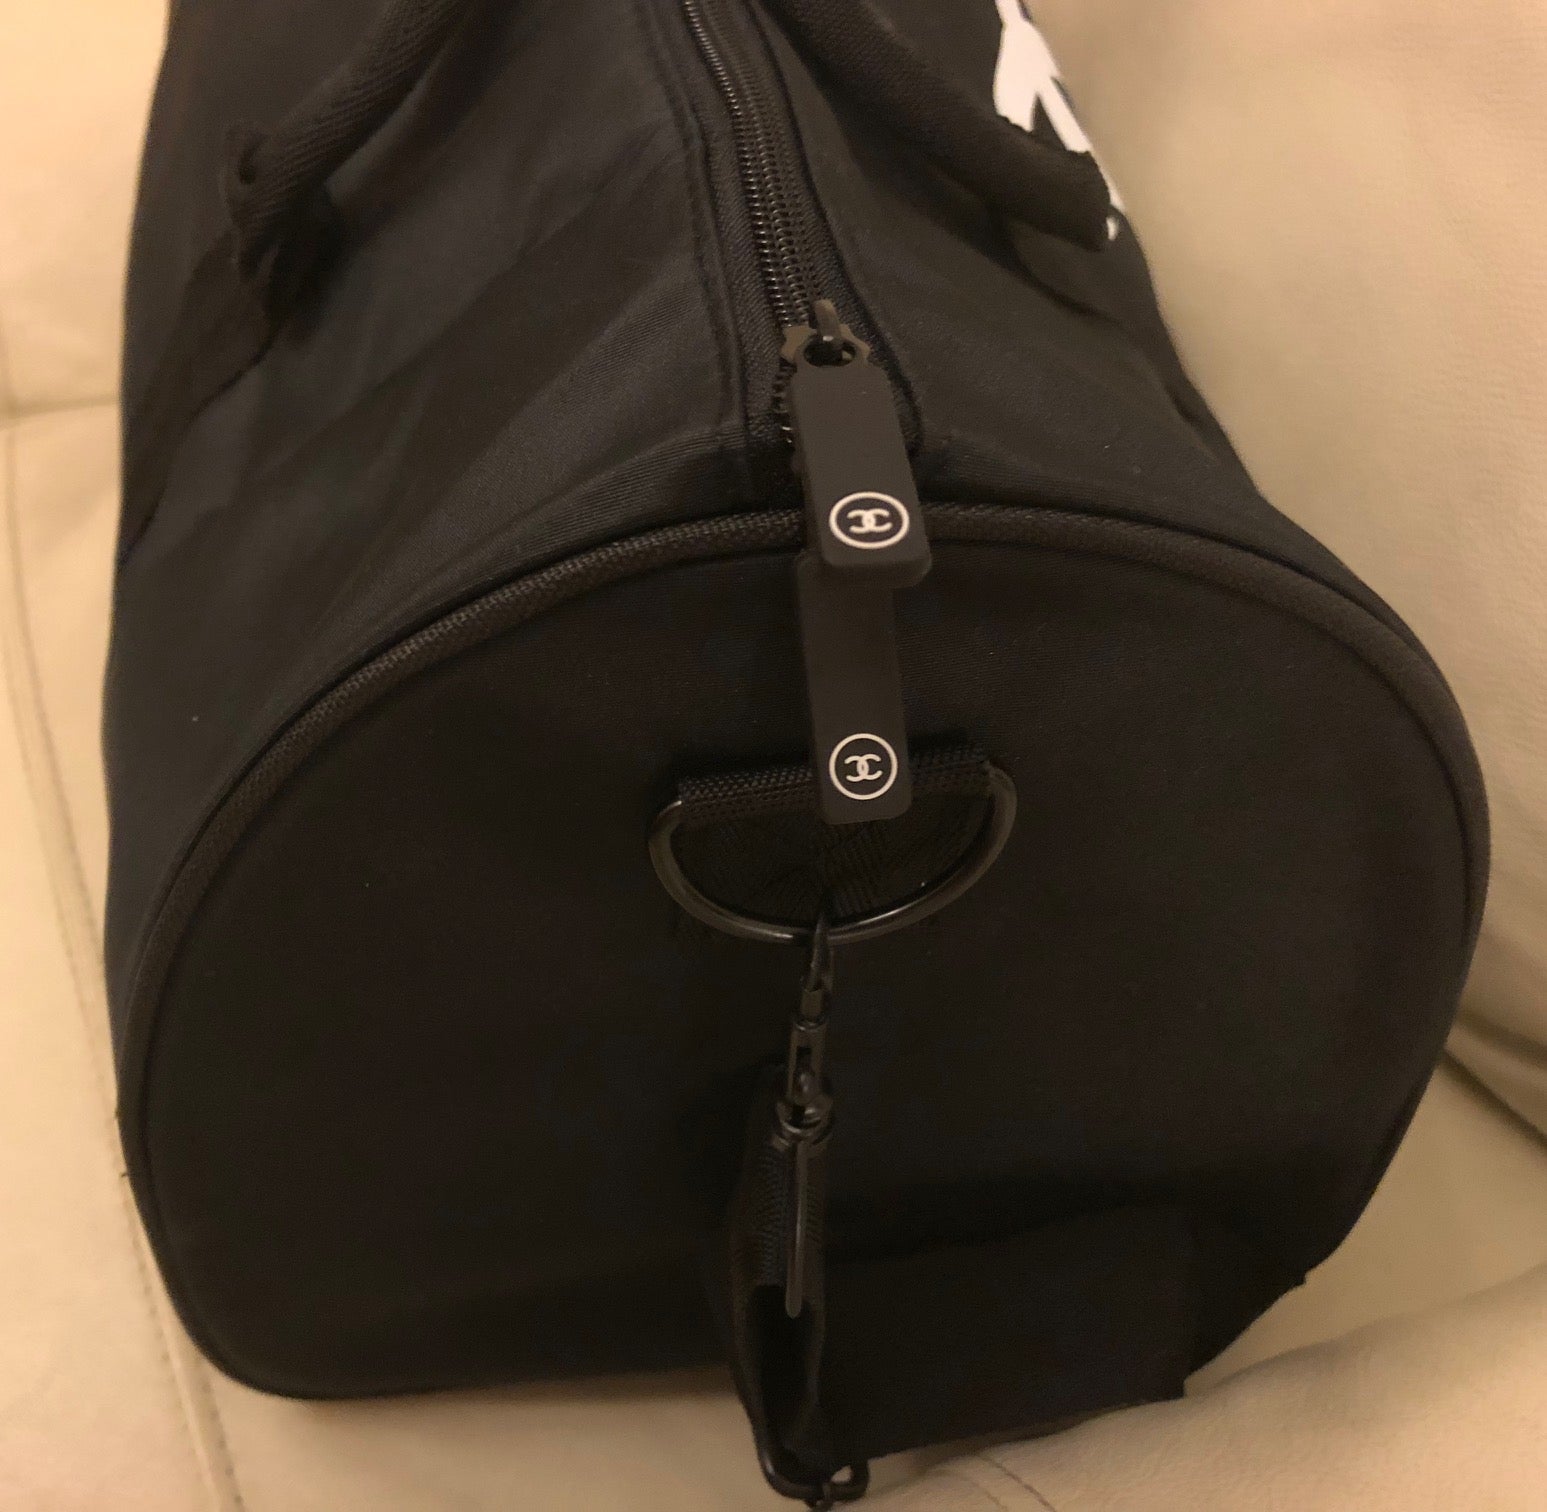 Chanel travel gym bag hanel Travel Bag Vip Gift Bag Gym CHANEL Bags, Authentic Chanel Vip Gift Chanel VIP Duffle Bag. VIP Customers NEW…